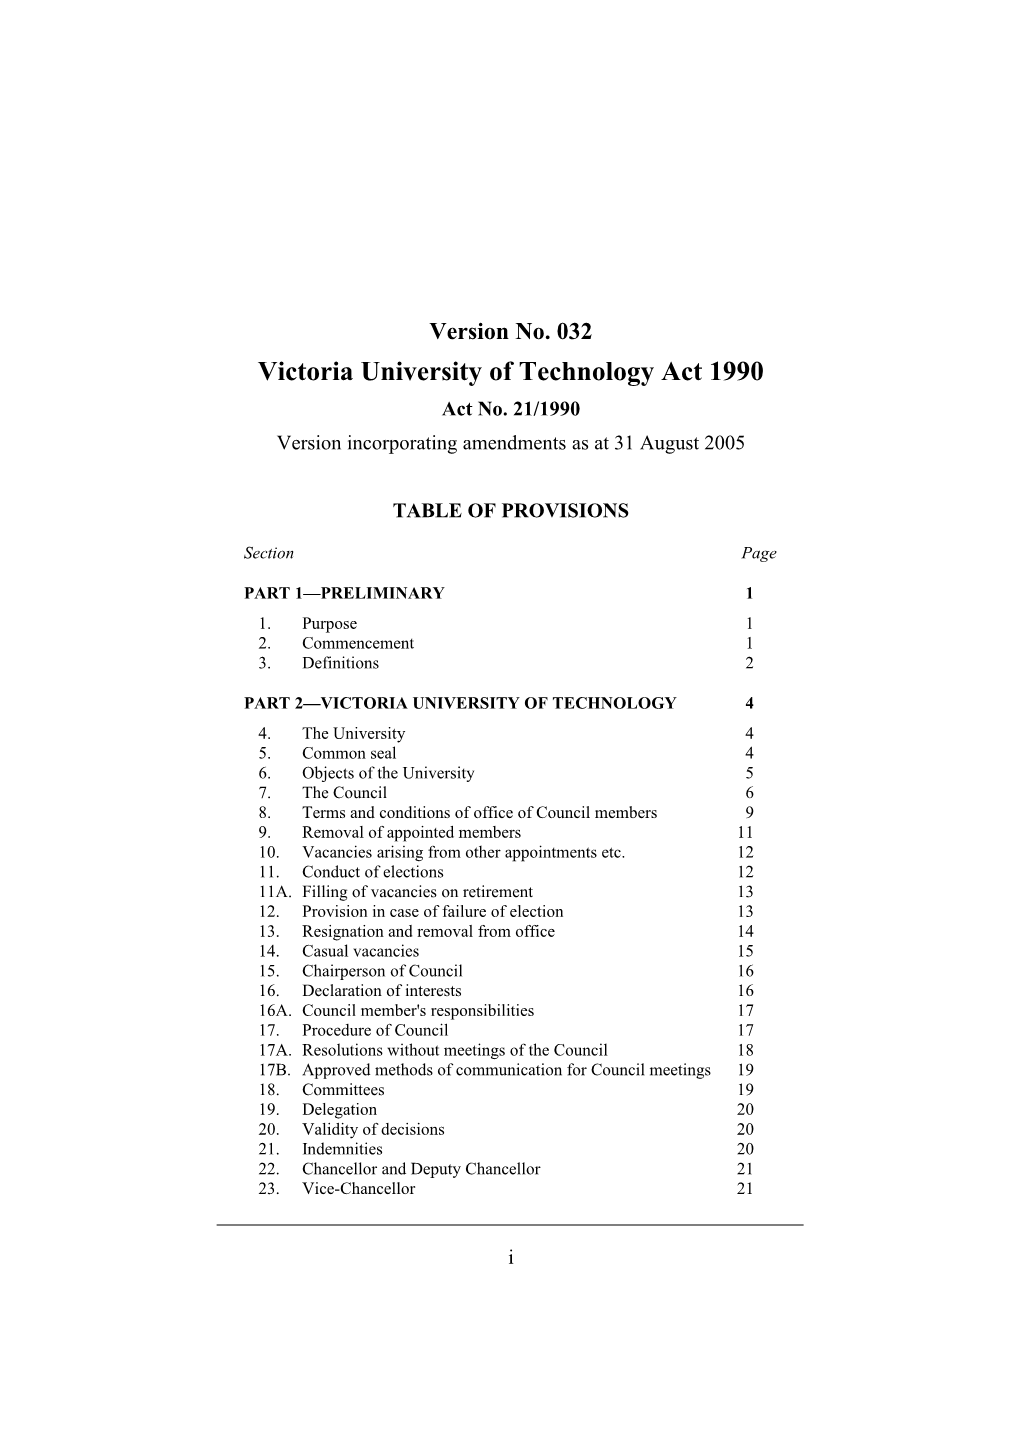 Victoria University of Technology Act 1990